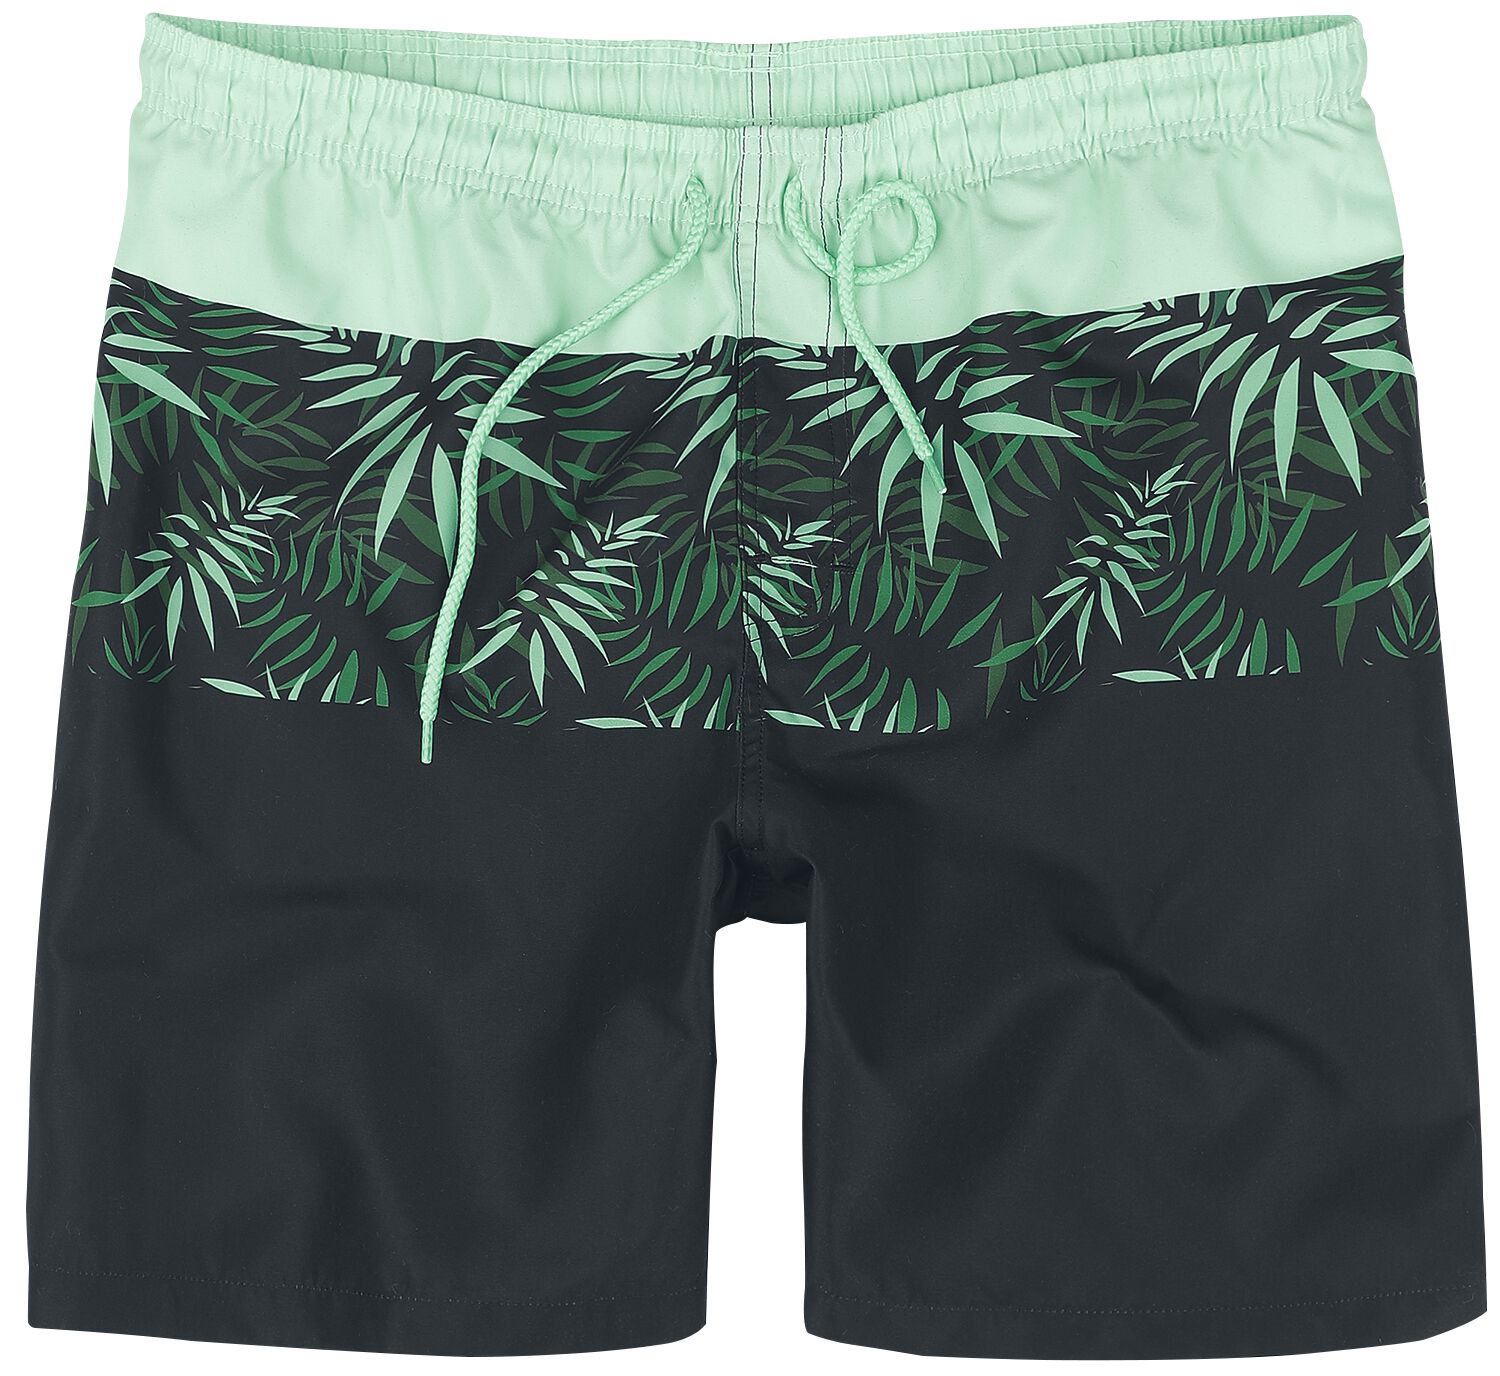 RED by EMP Swim Shorts With Palm Trees Badeshort schwarz grün in XL